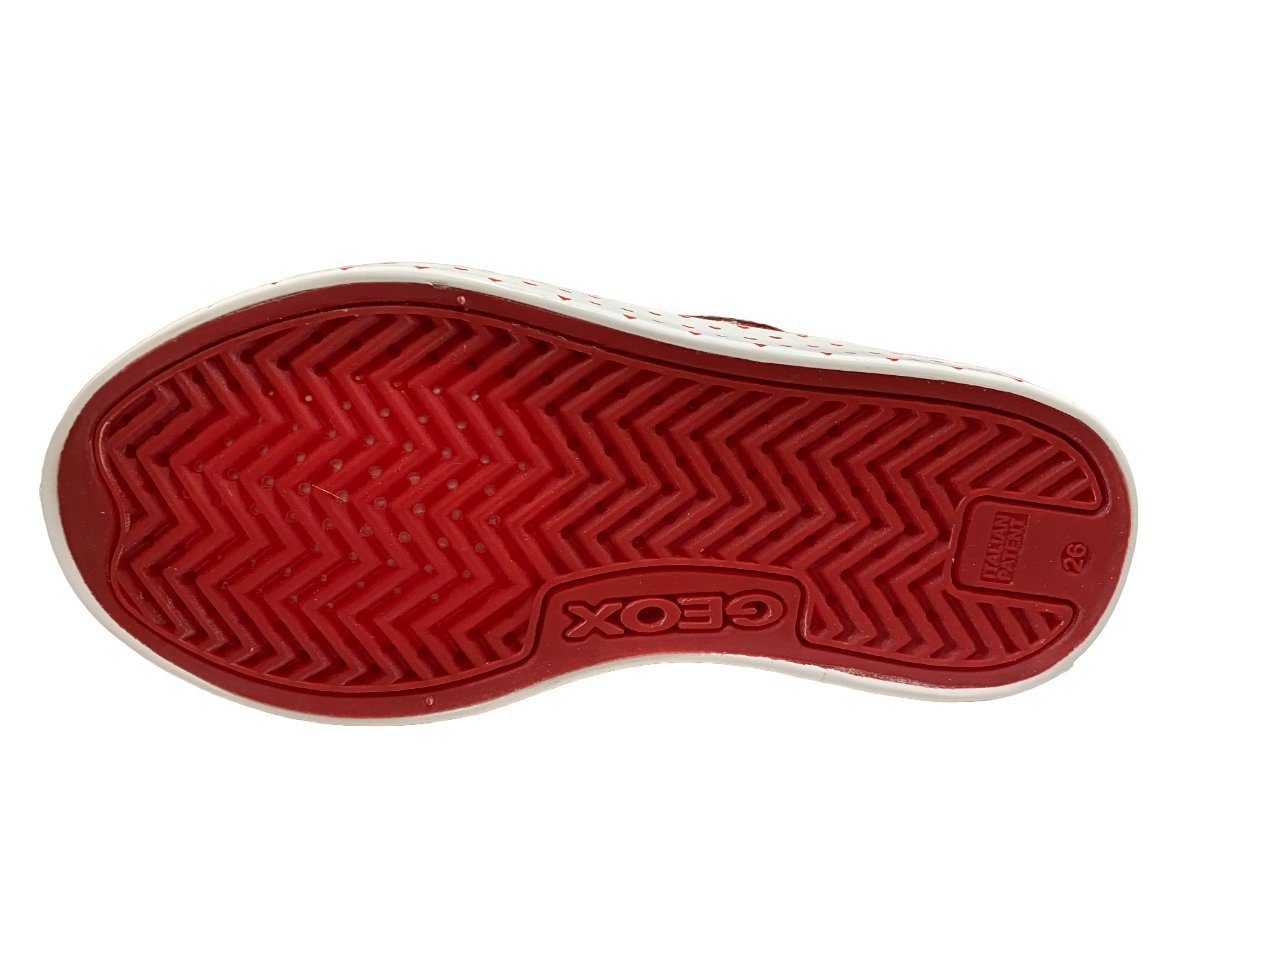 Geox GEOX WHITE/RED G. CIAK Sneaker Sneaker J Kinder J3504G-01054-C0050